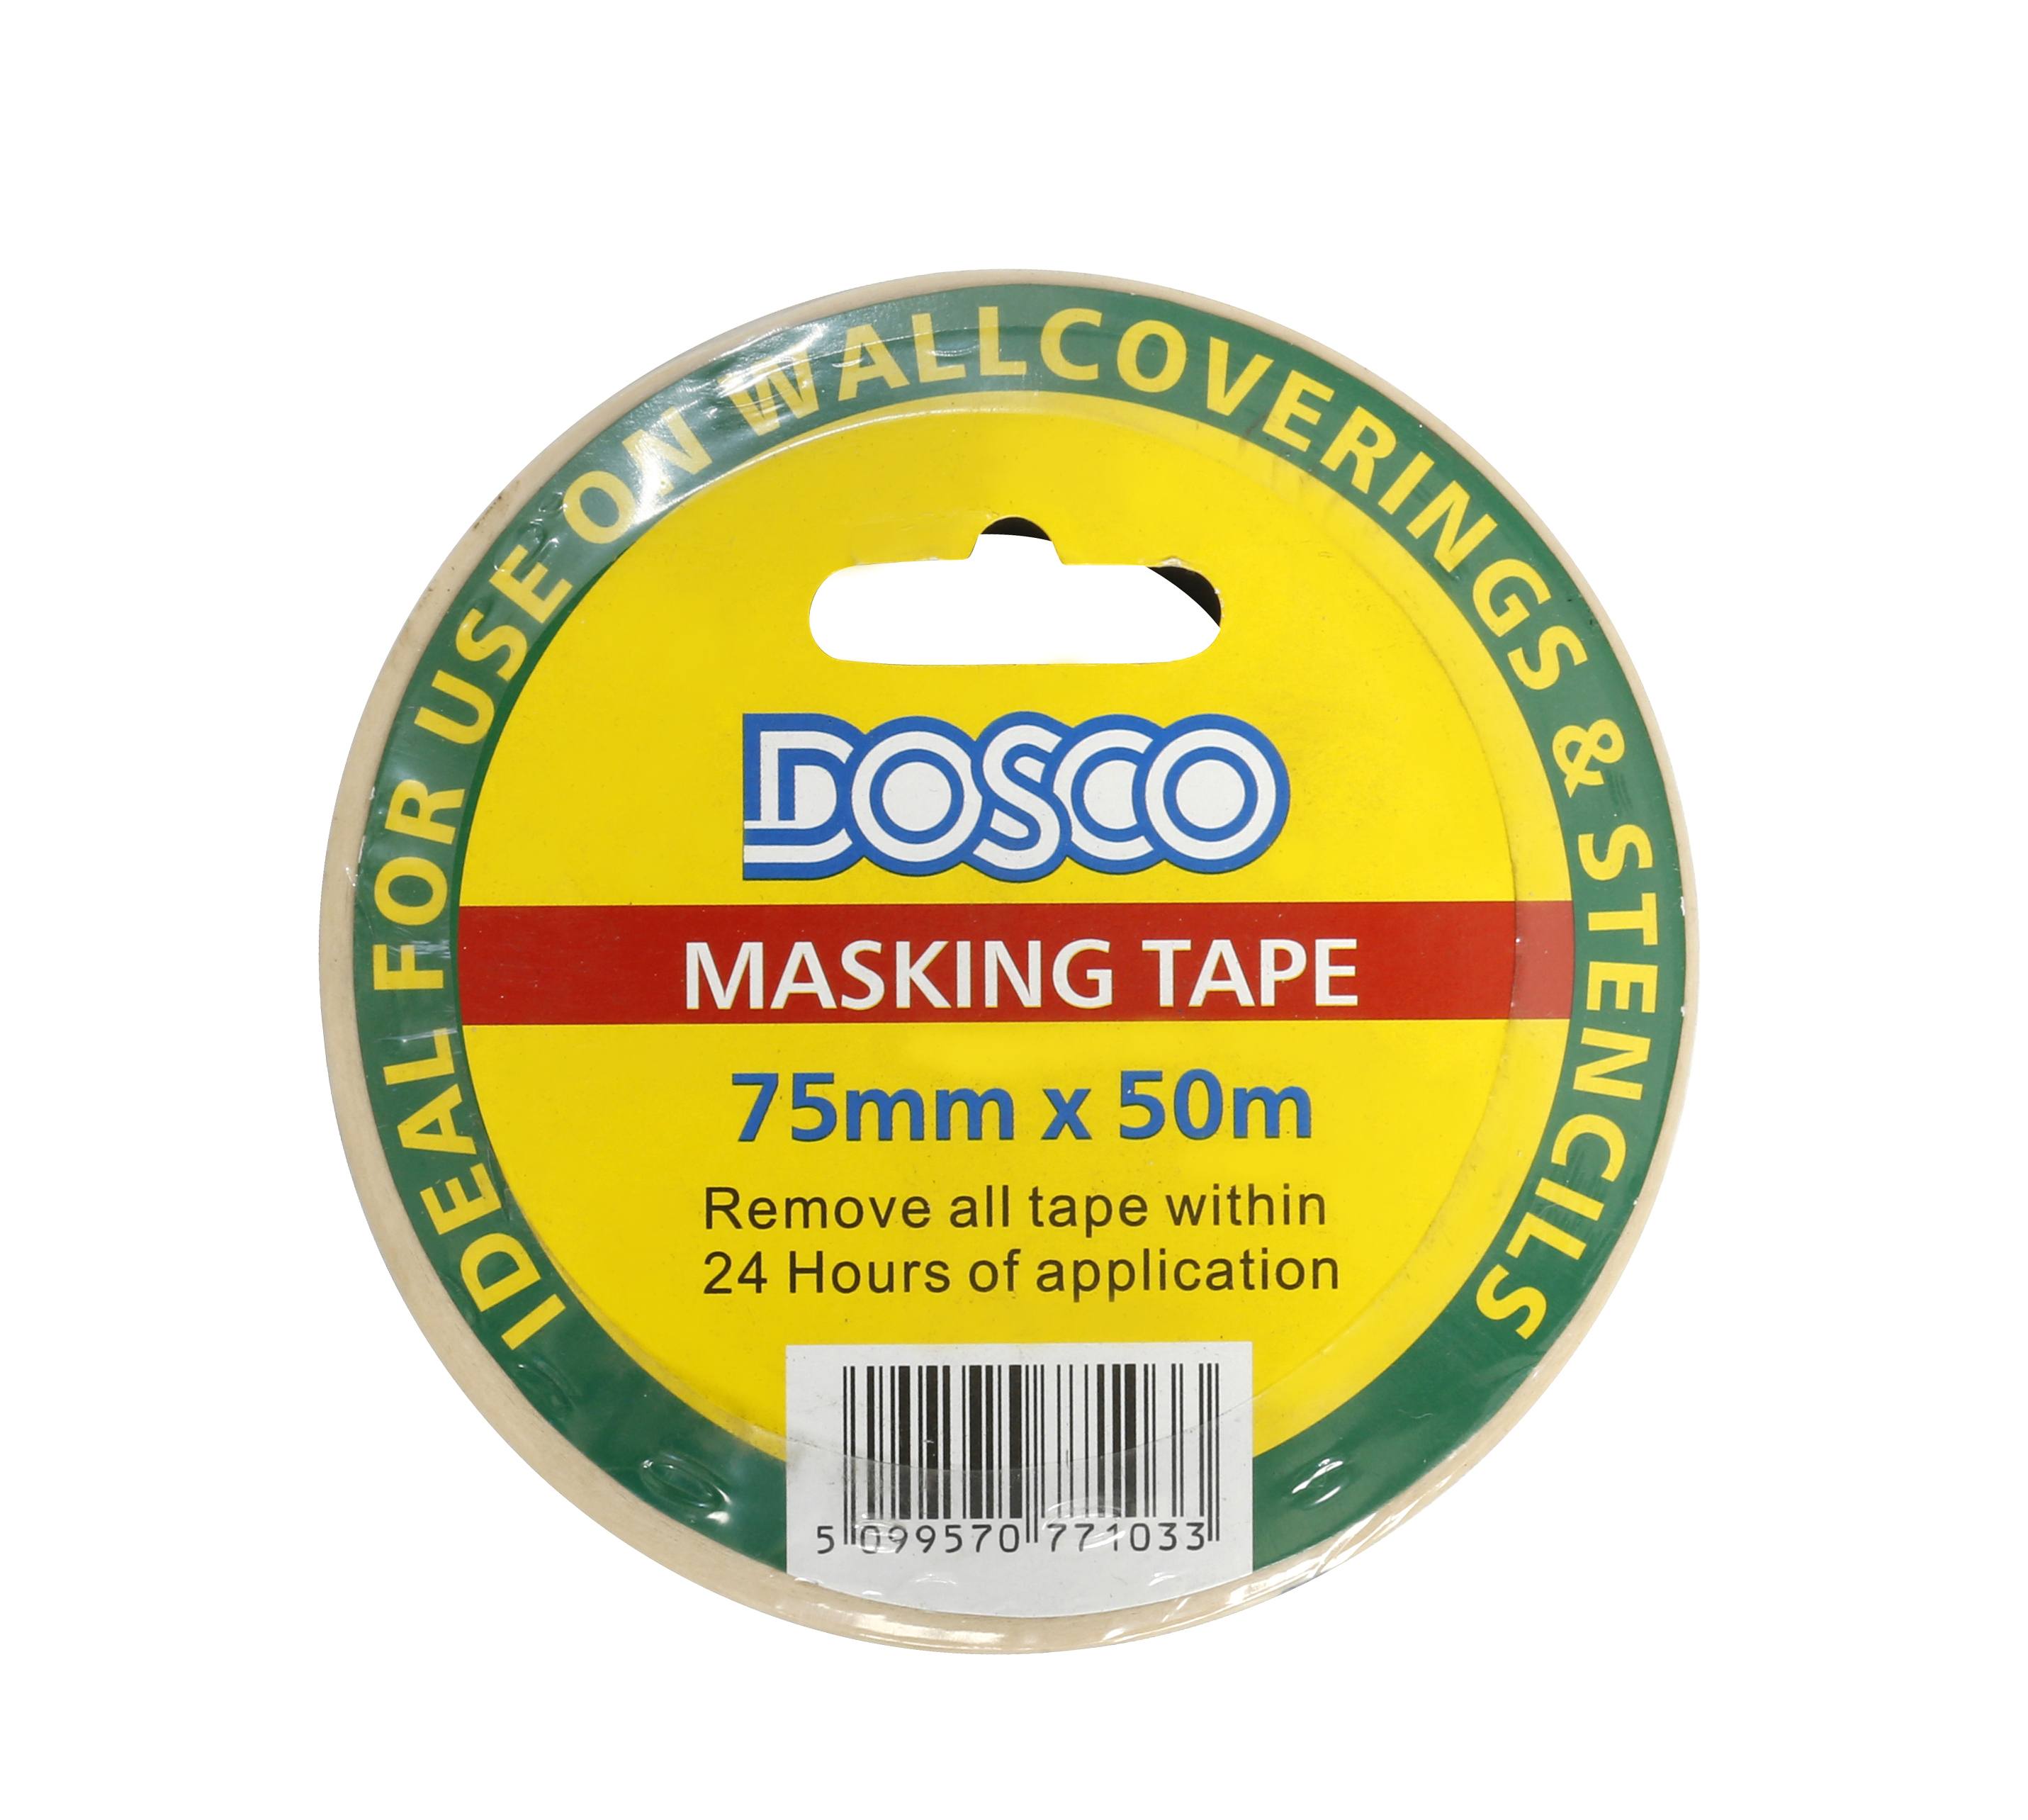 Dosco Masking Tape